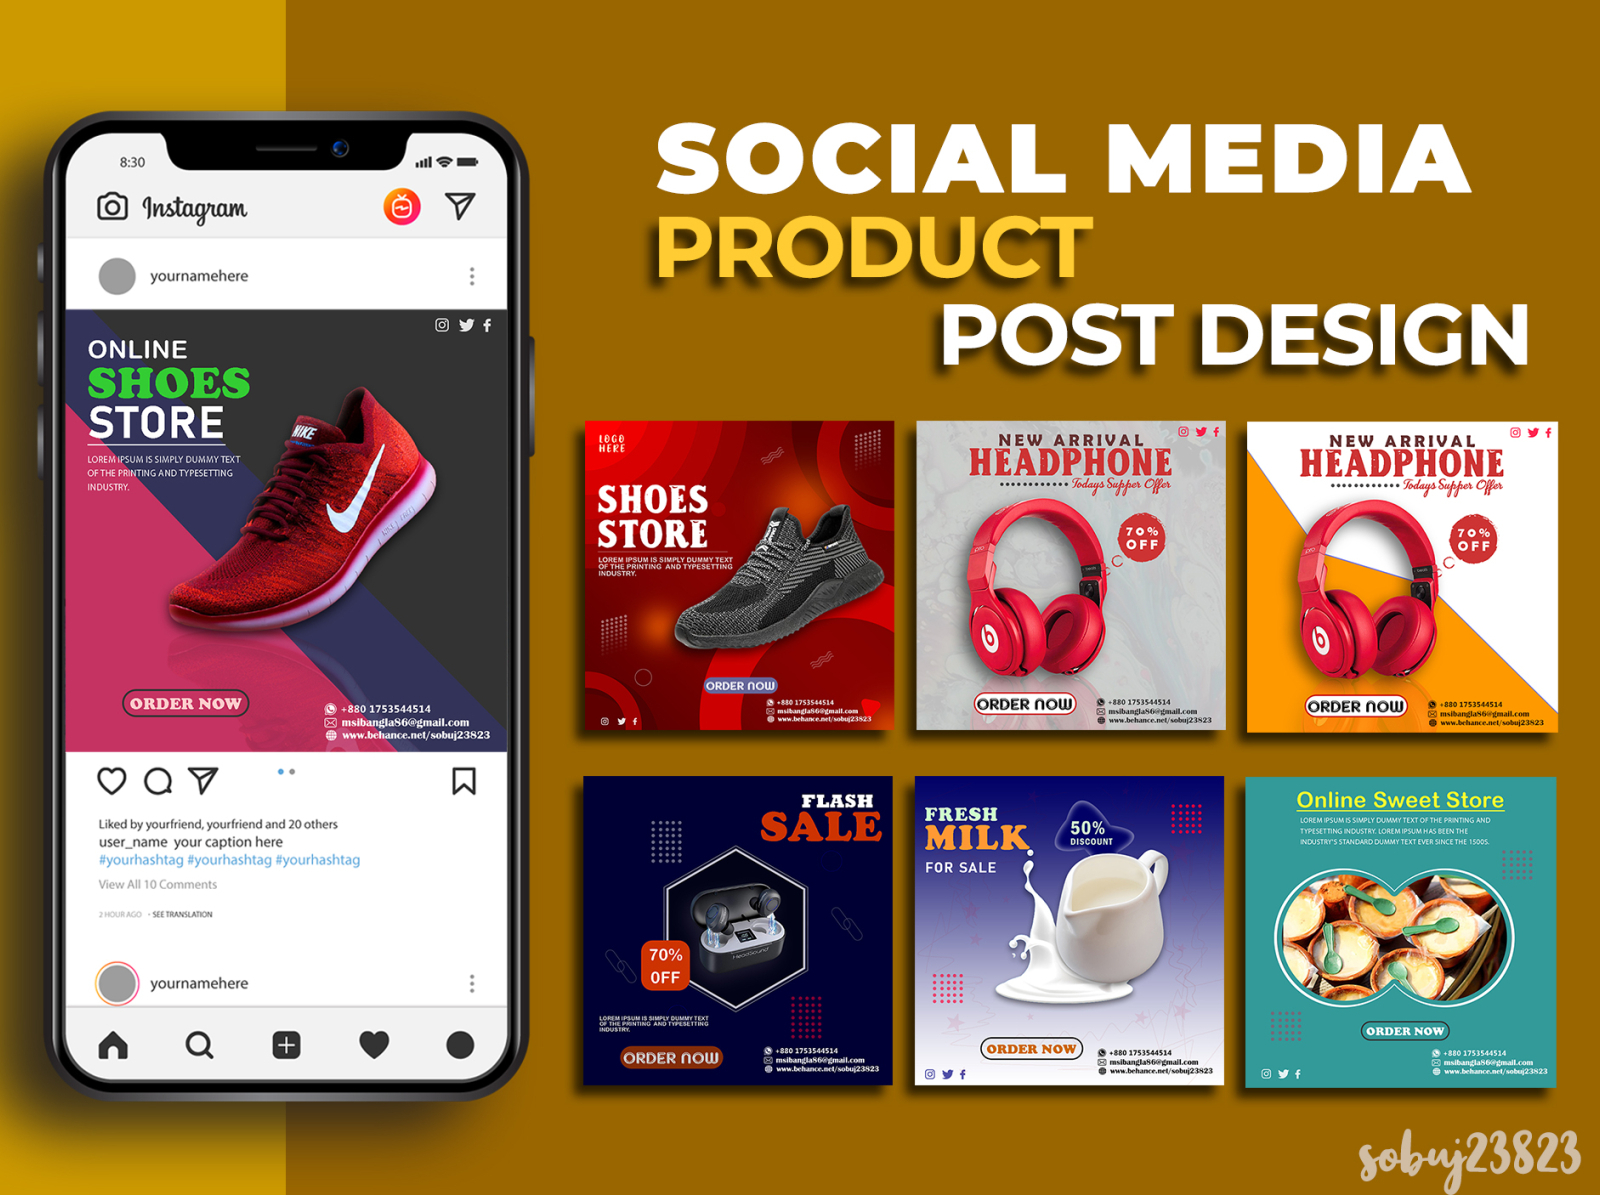 Product Social Media Post Design by Mr. Freelance on Dribbble